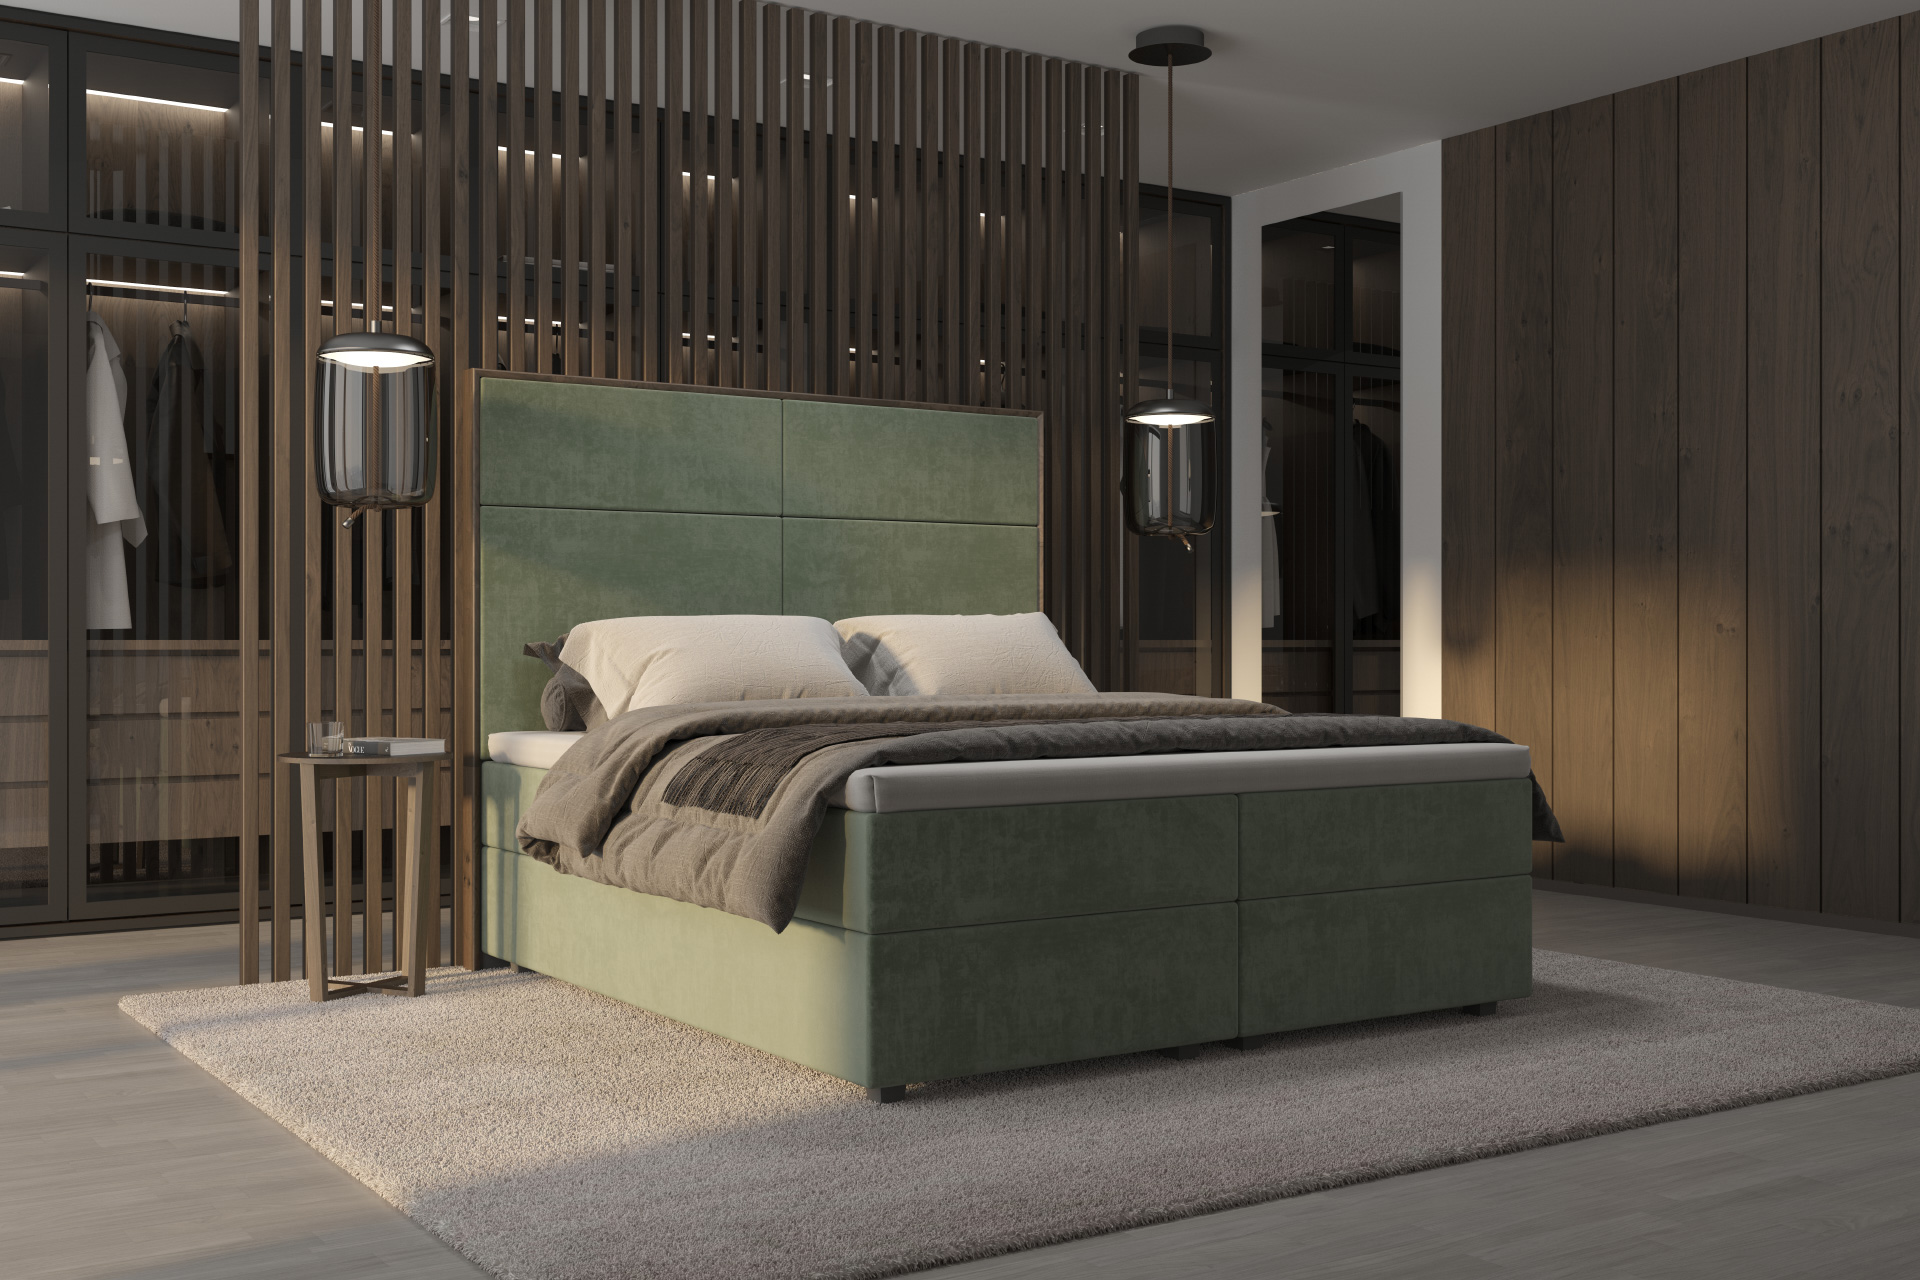 Hanák LUTON bedroom Luxurious and premium look